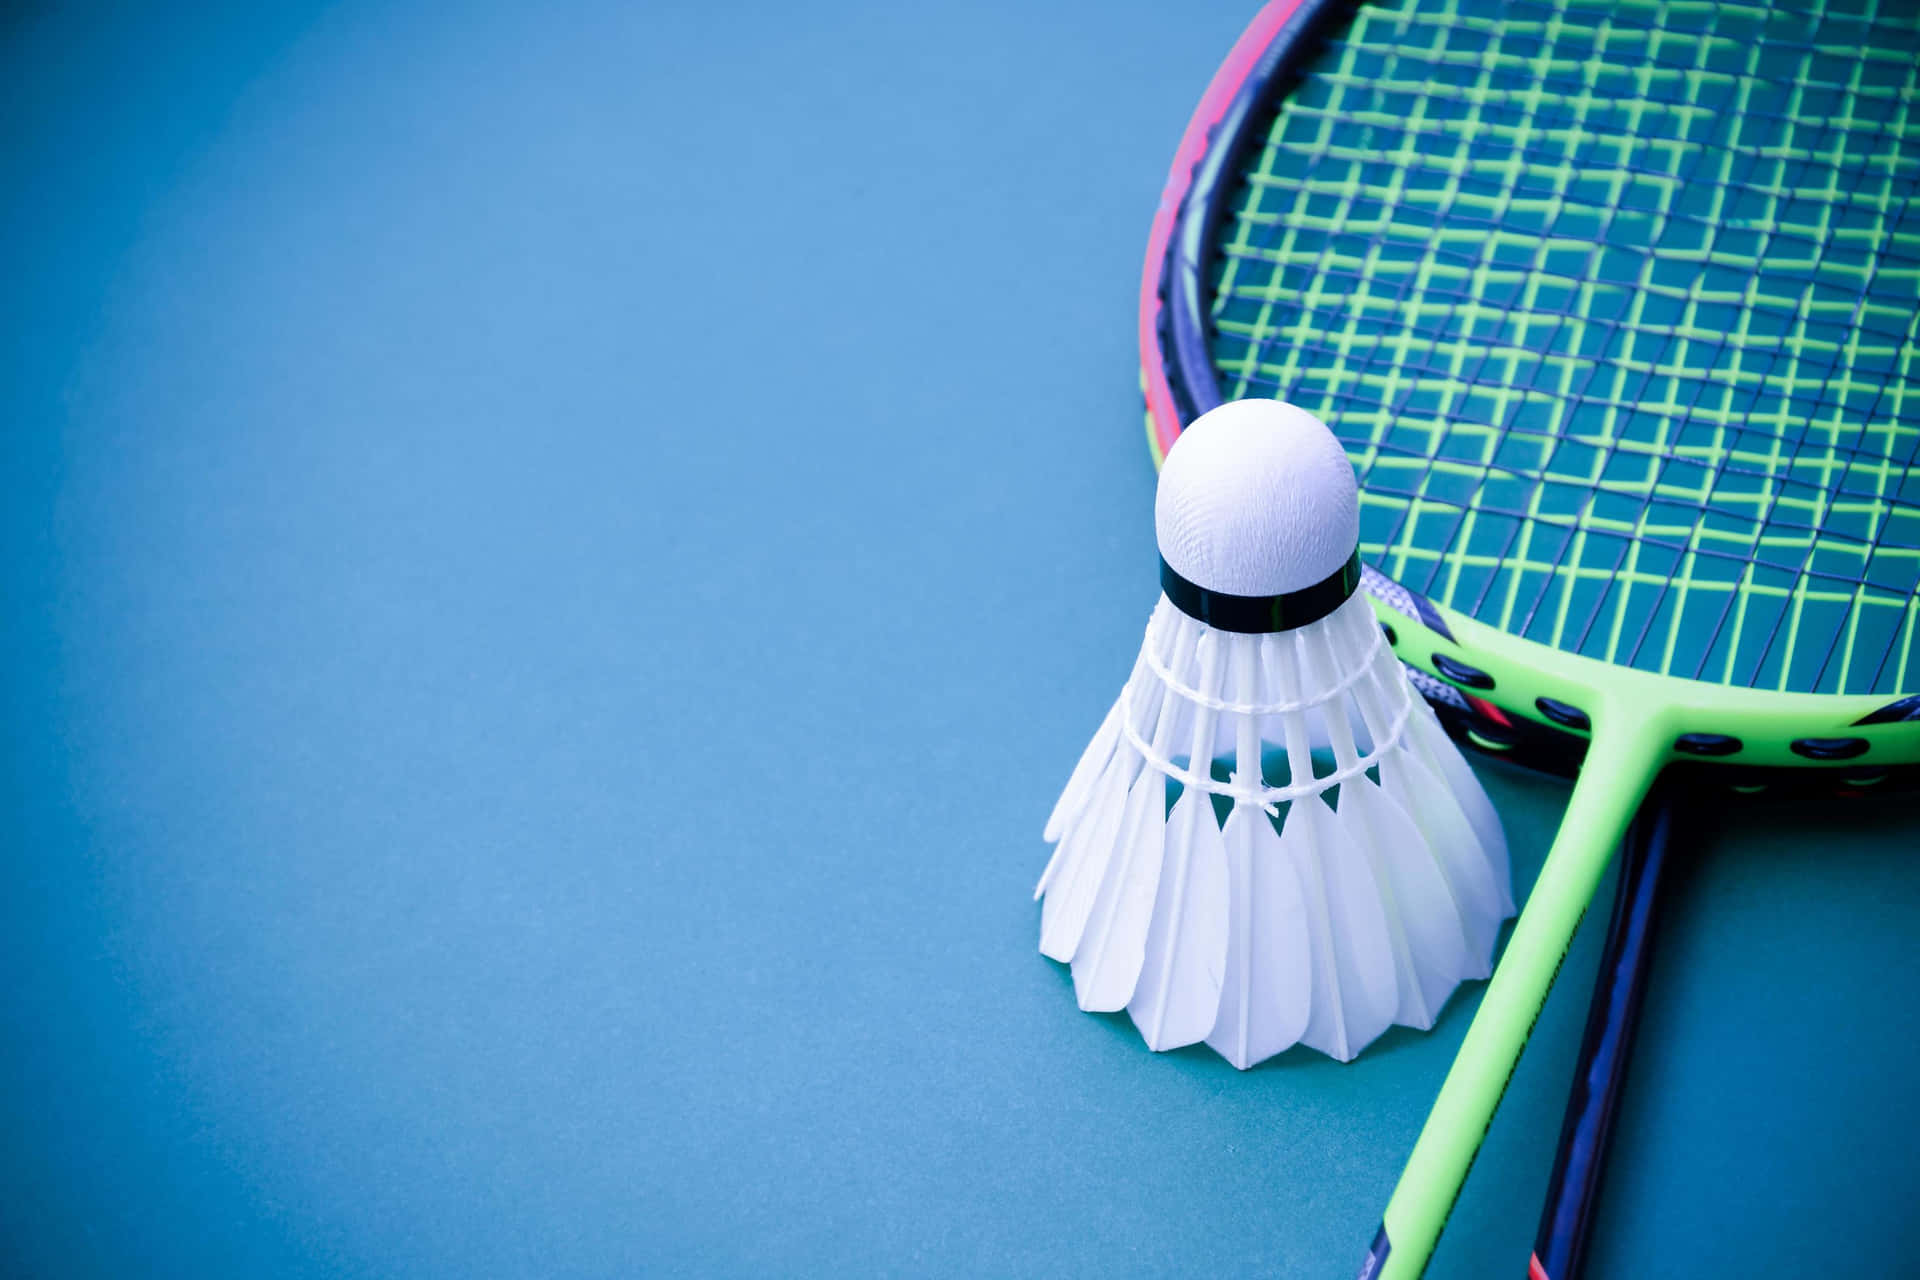 [200+] Badminton Backgrounds | Wallpapers.com